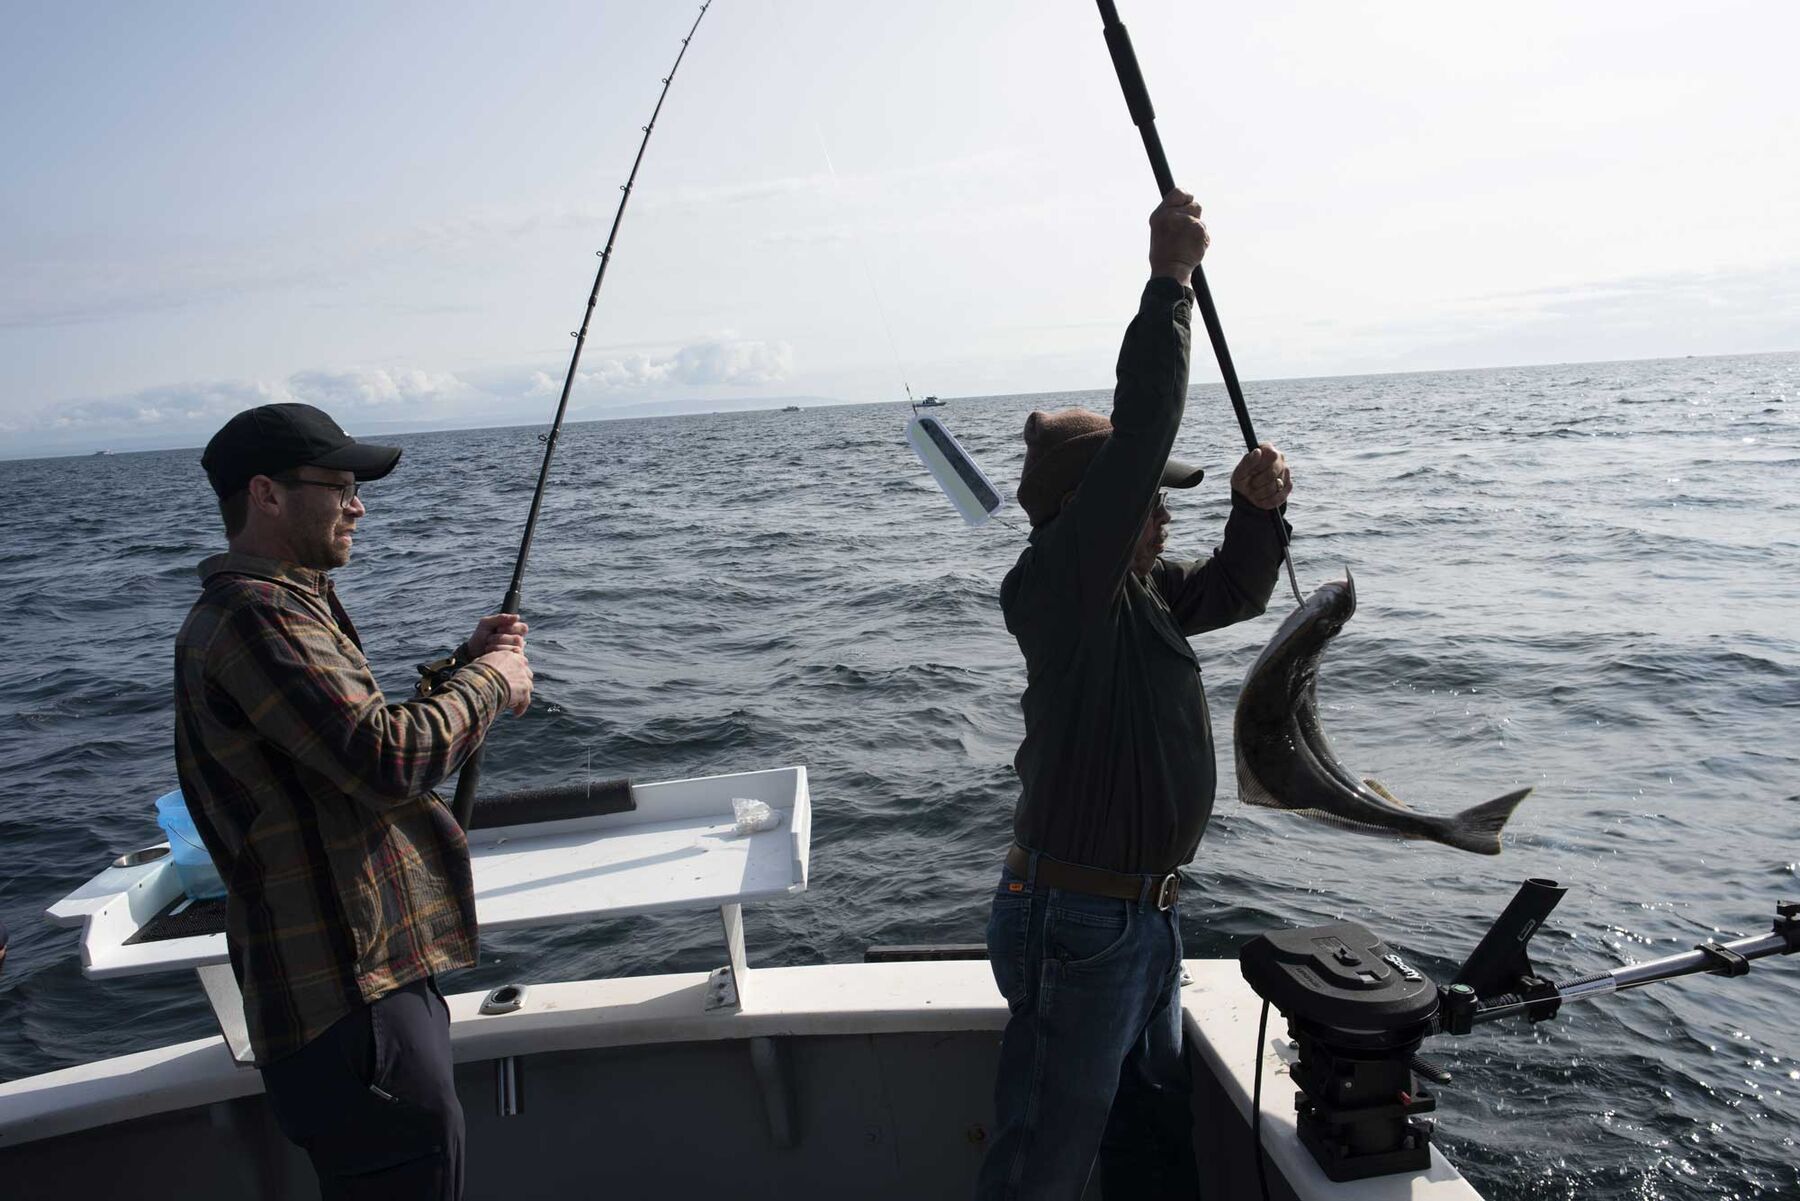 Alaska pollock industry warns of full fishery closure if